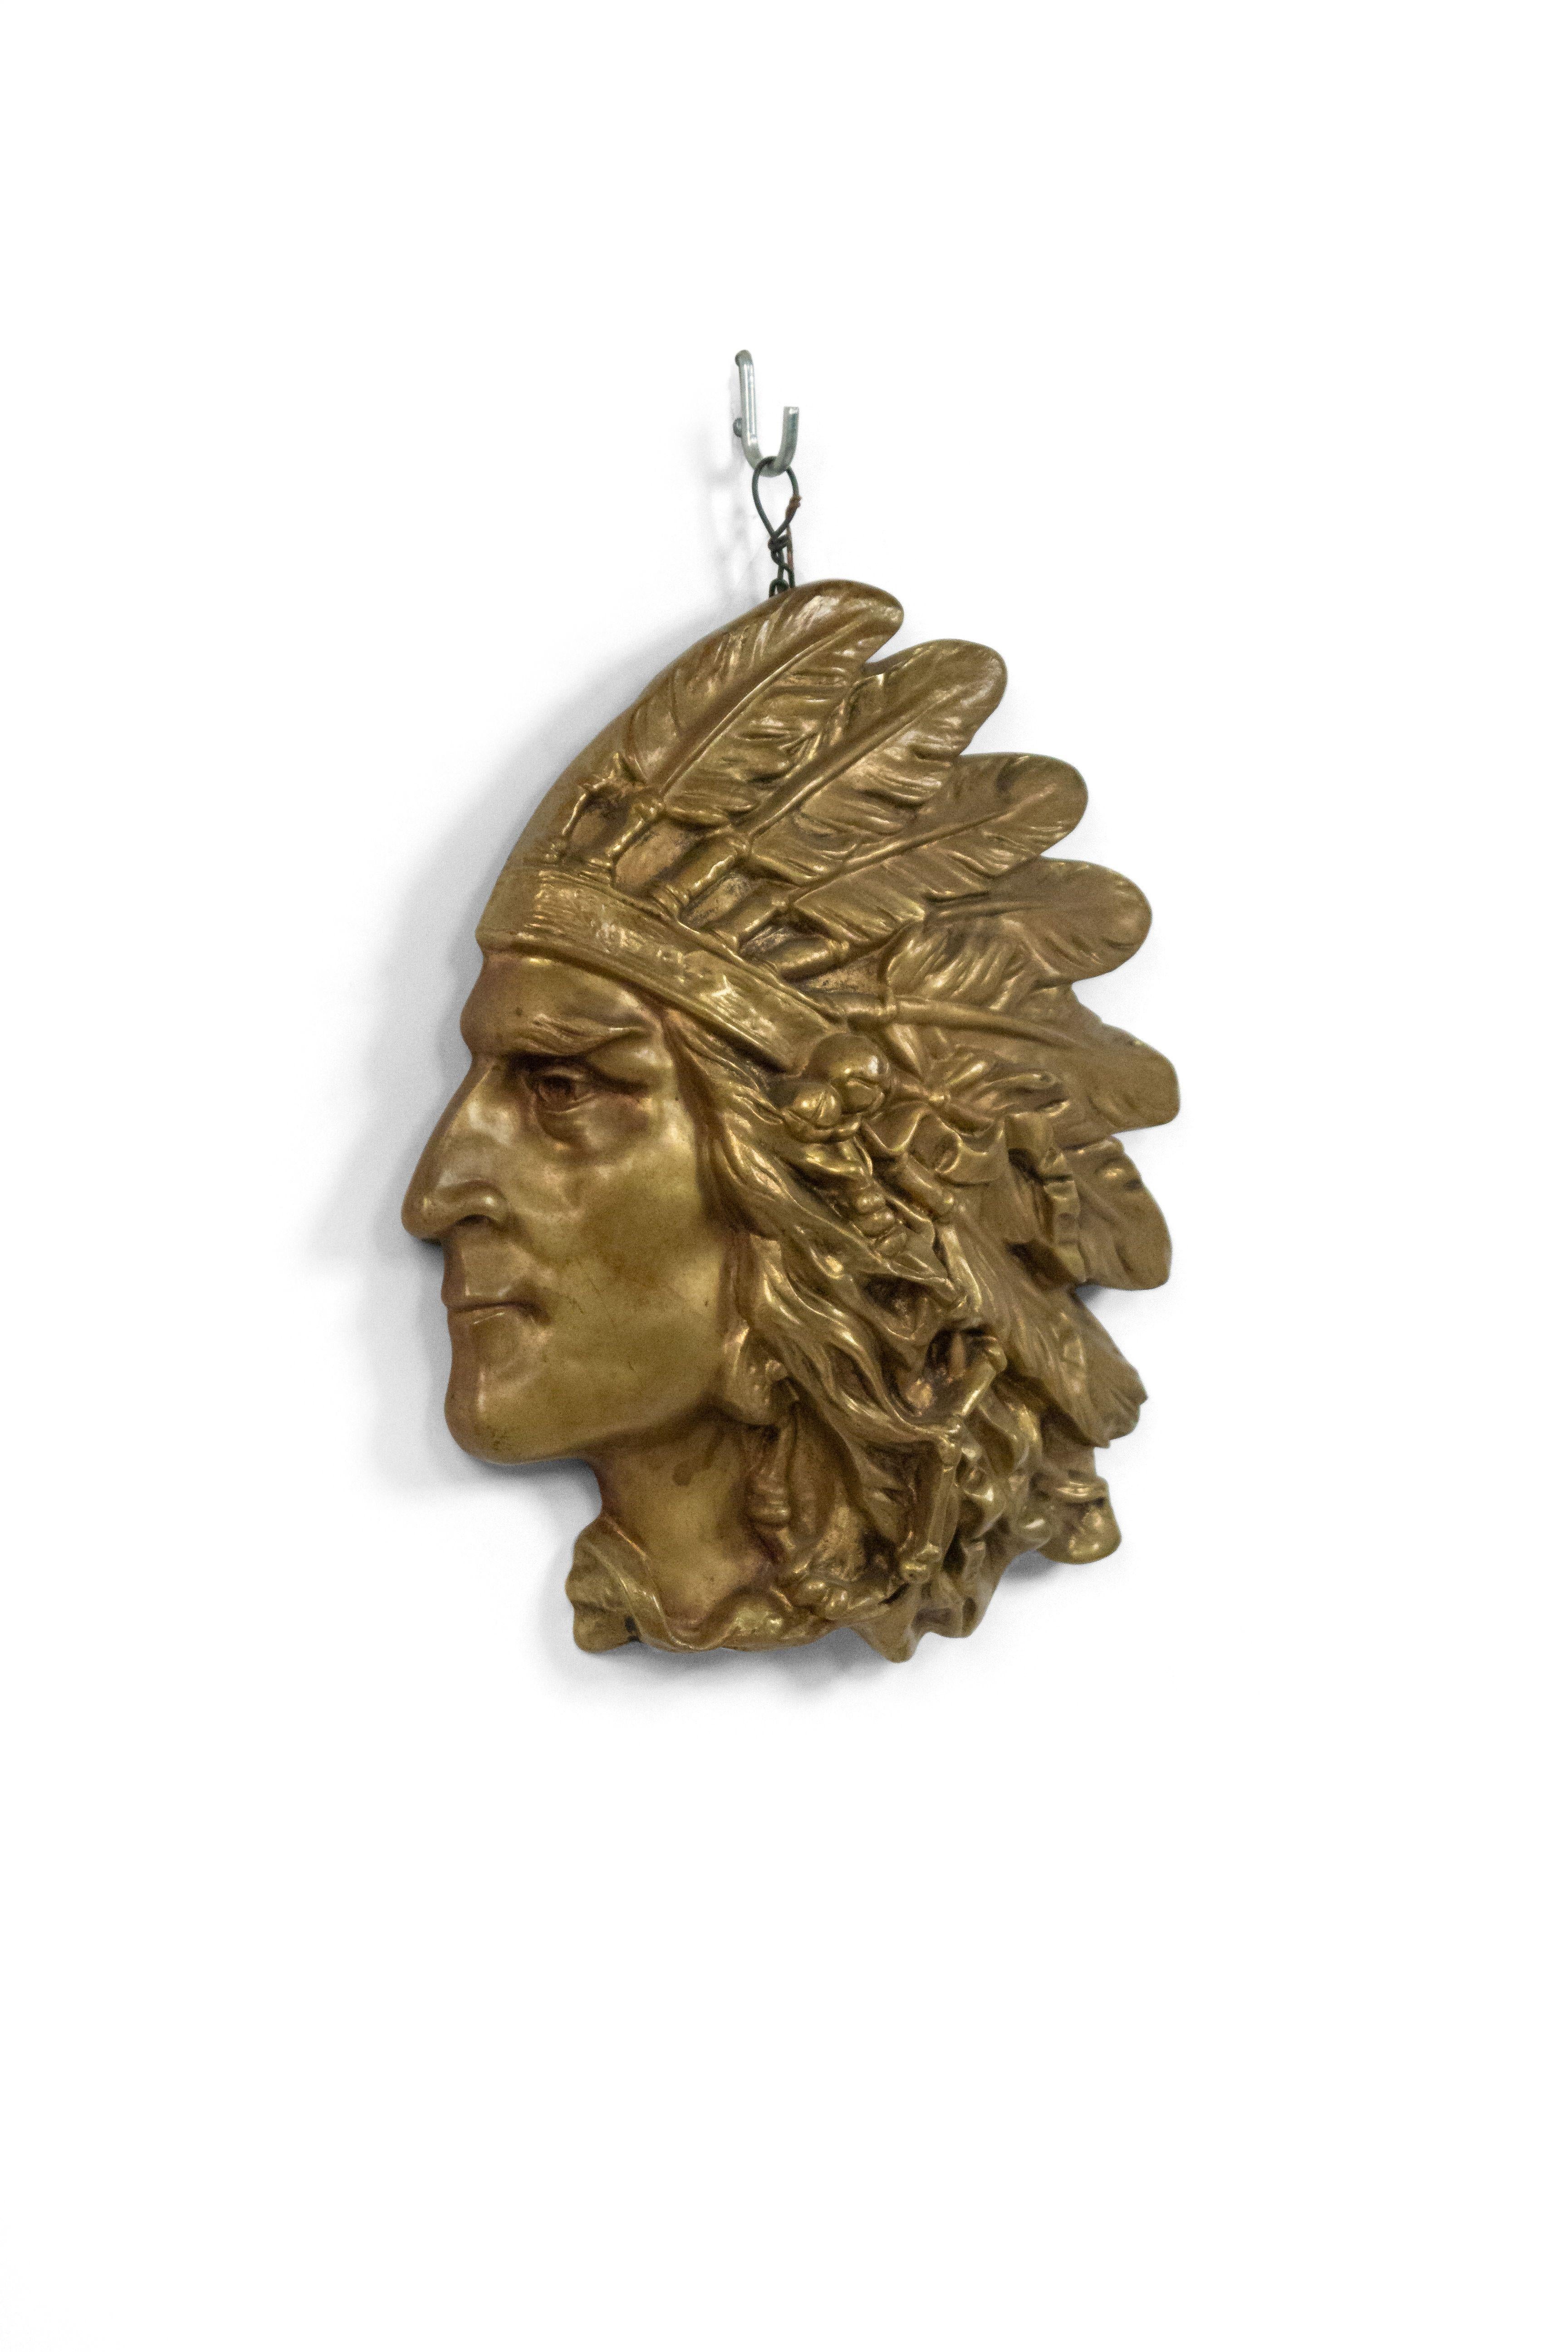 American (circa 1925) bronze wall plaque of Indian head in profile.
